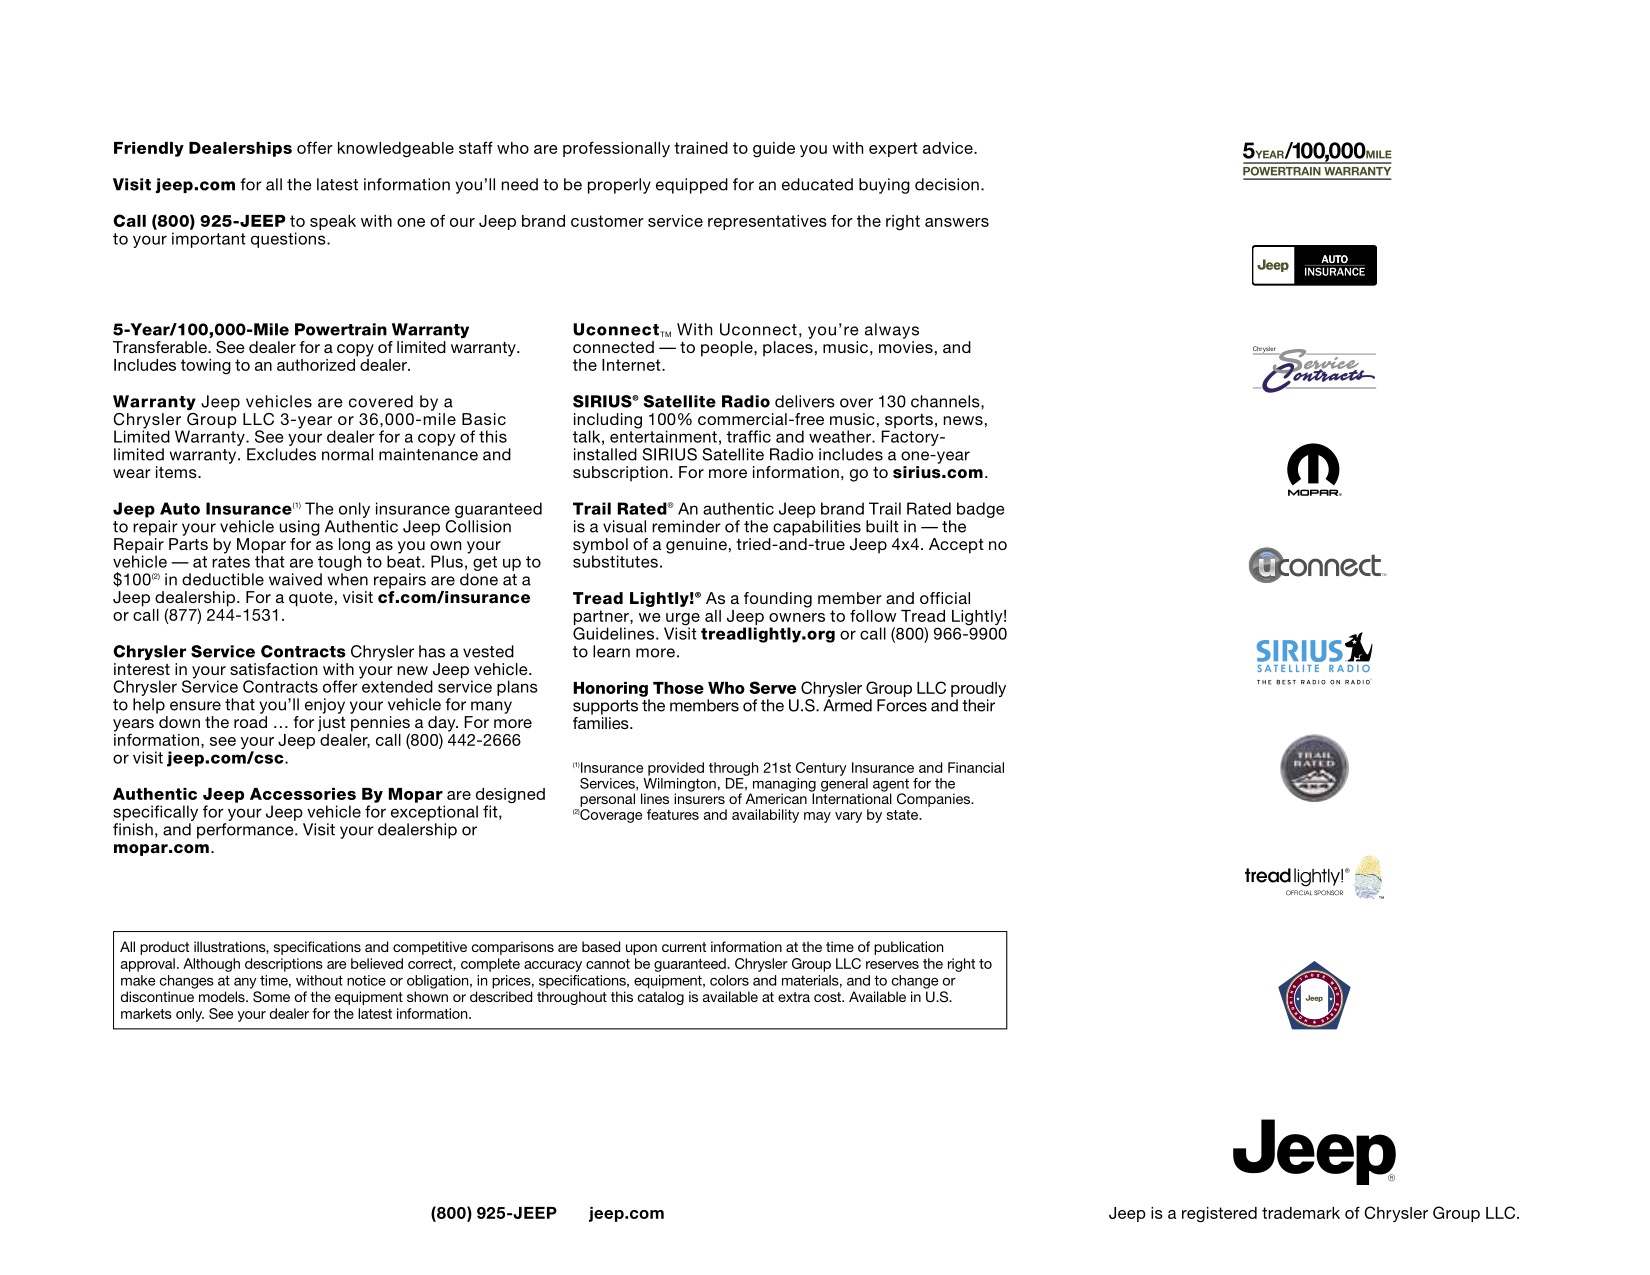 2010 Jeep Grand Cherokee Brochure Page 1